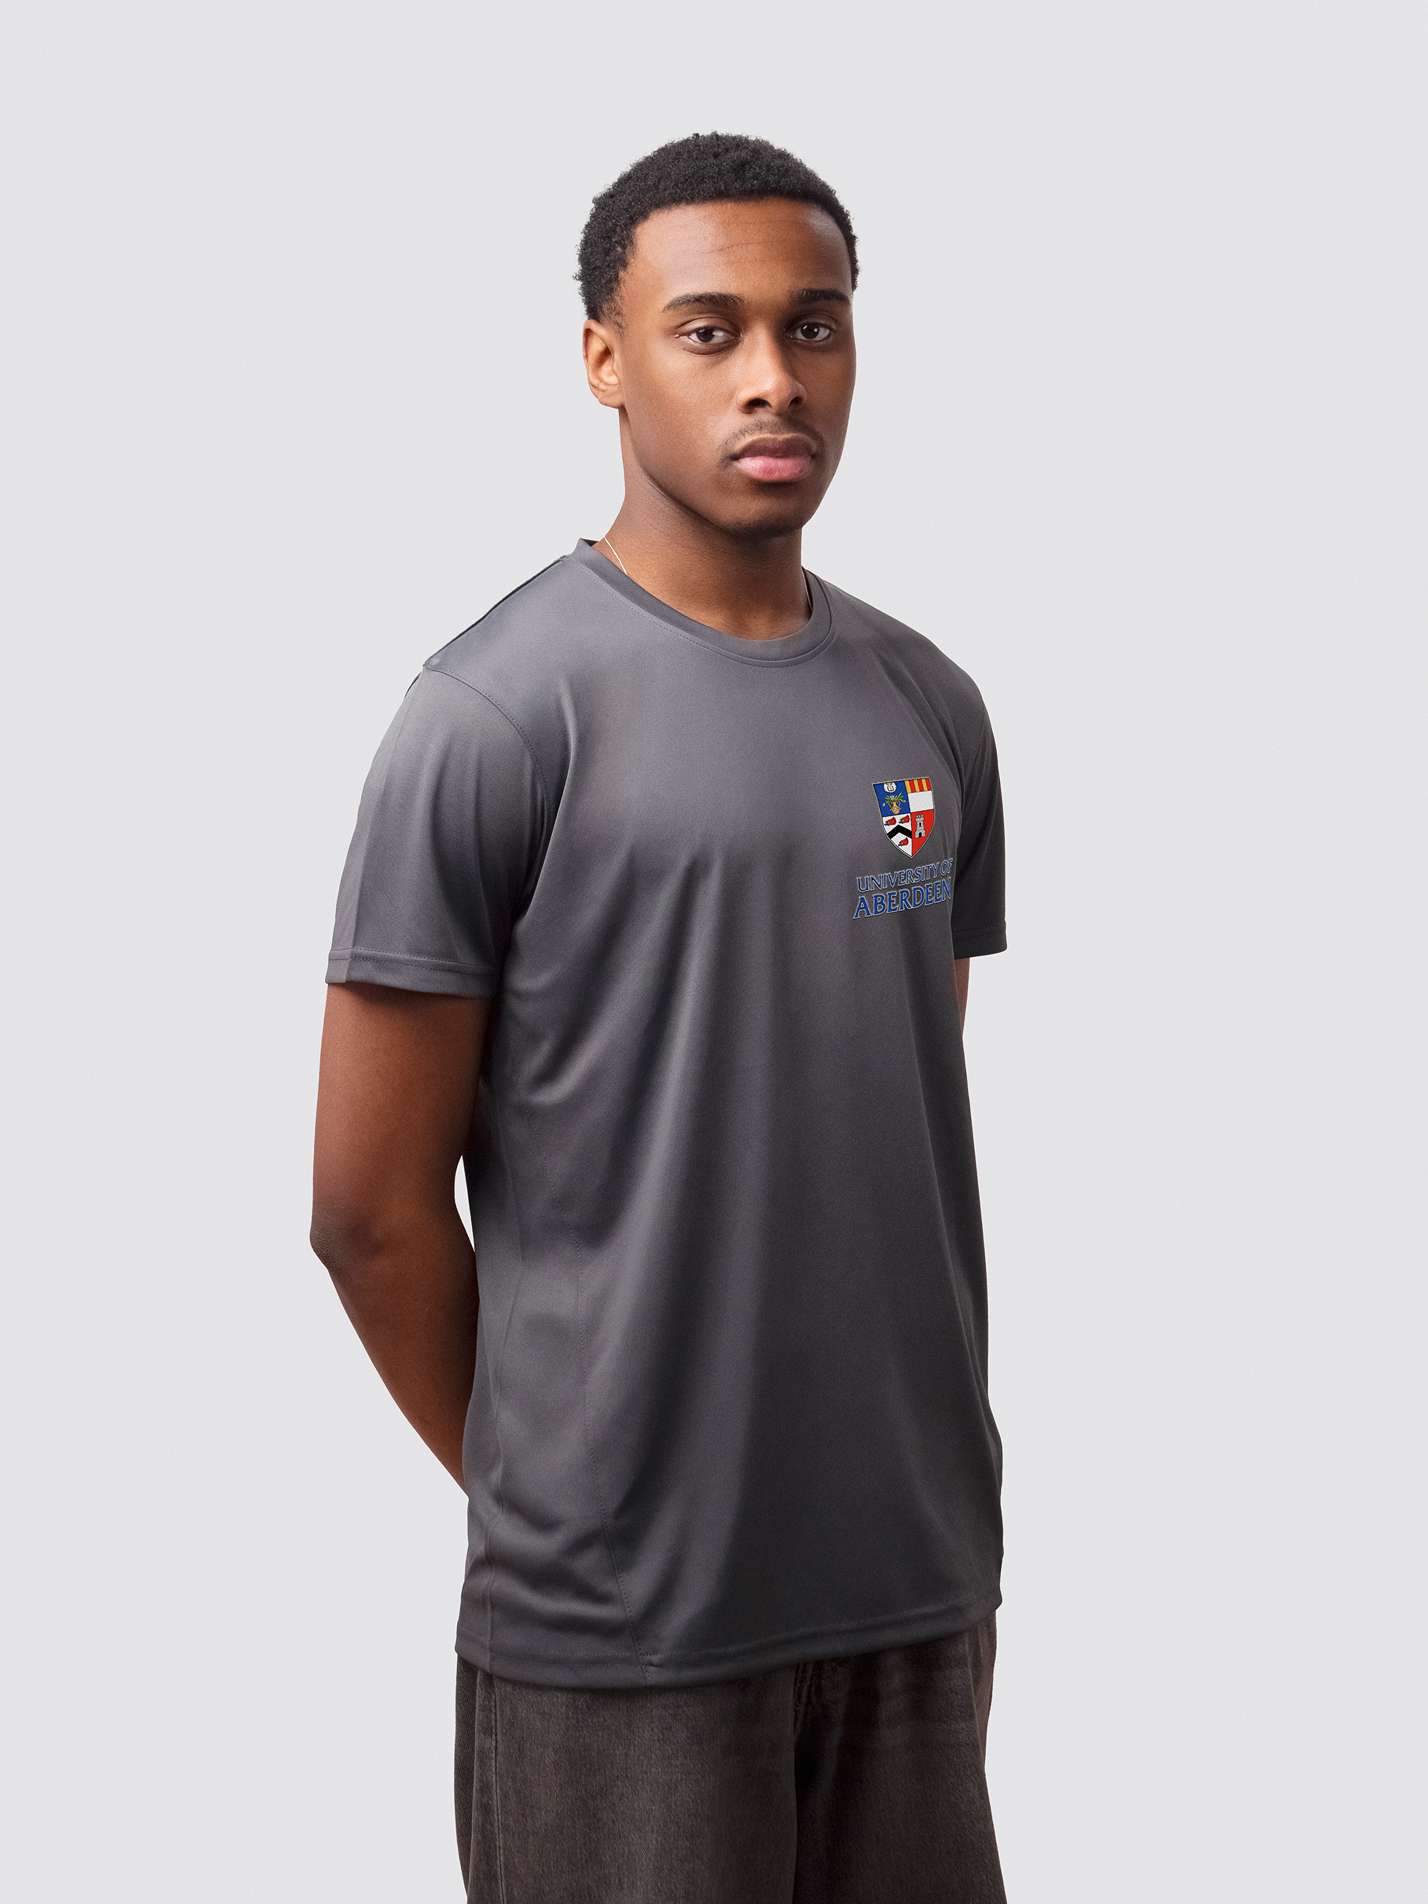 Aberdeen Athletics Sustainable Unisex Performance T-Shirt